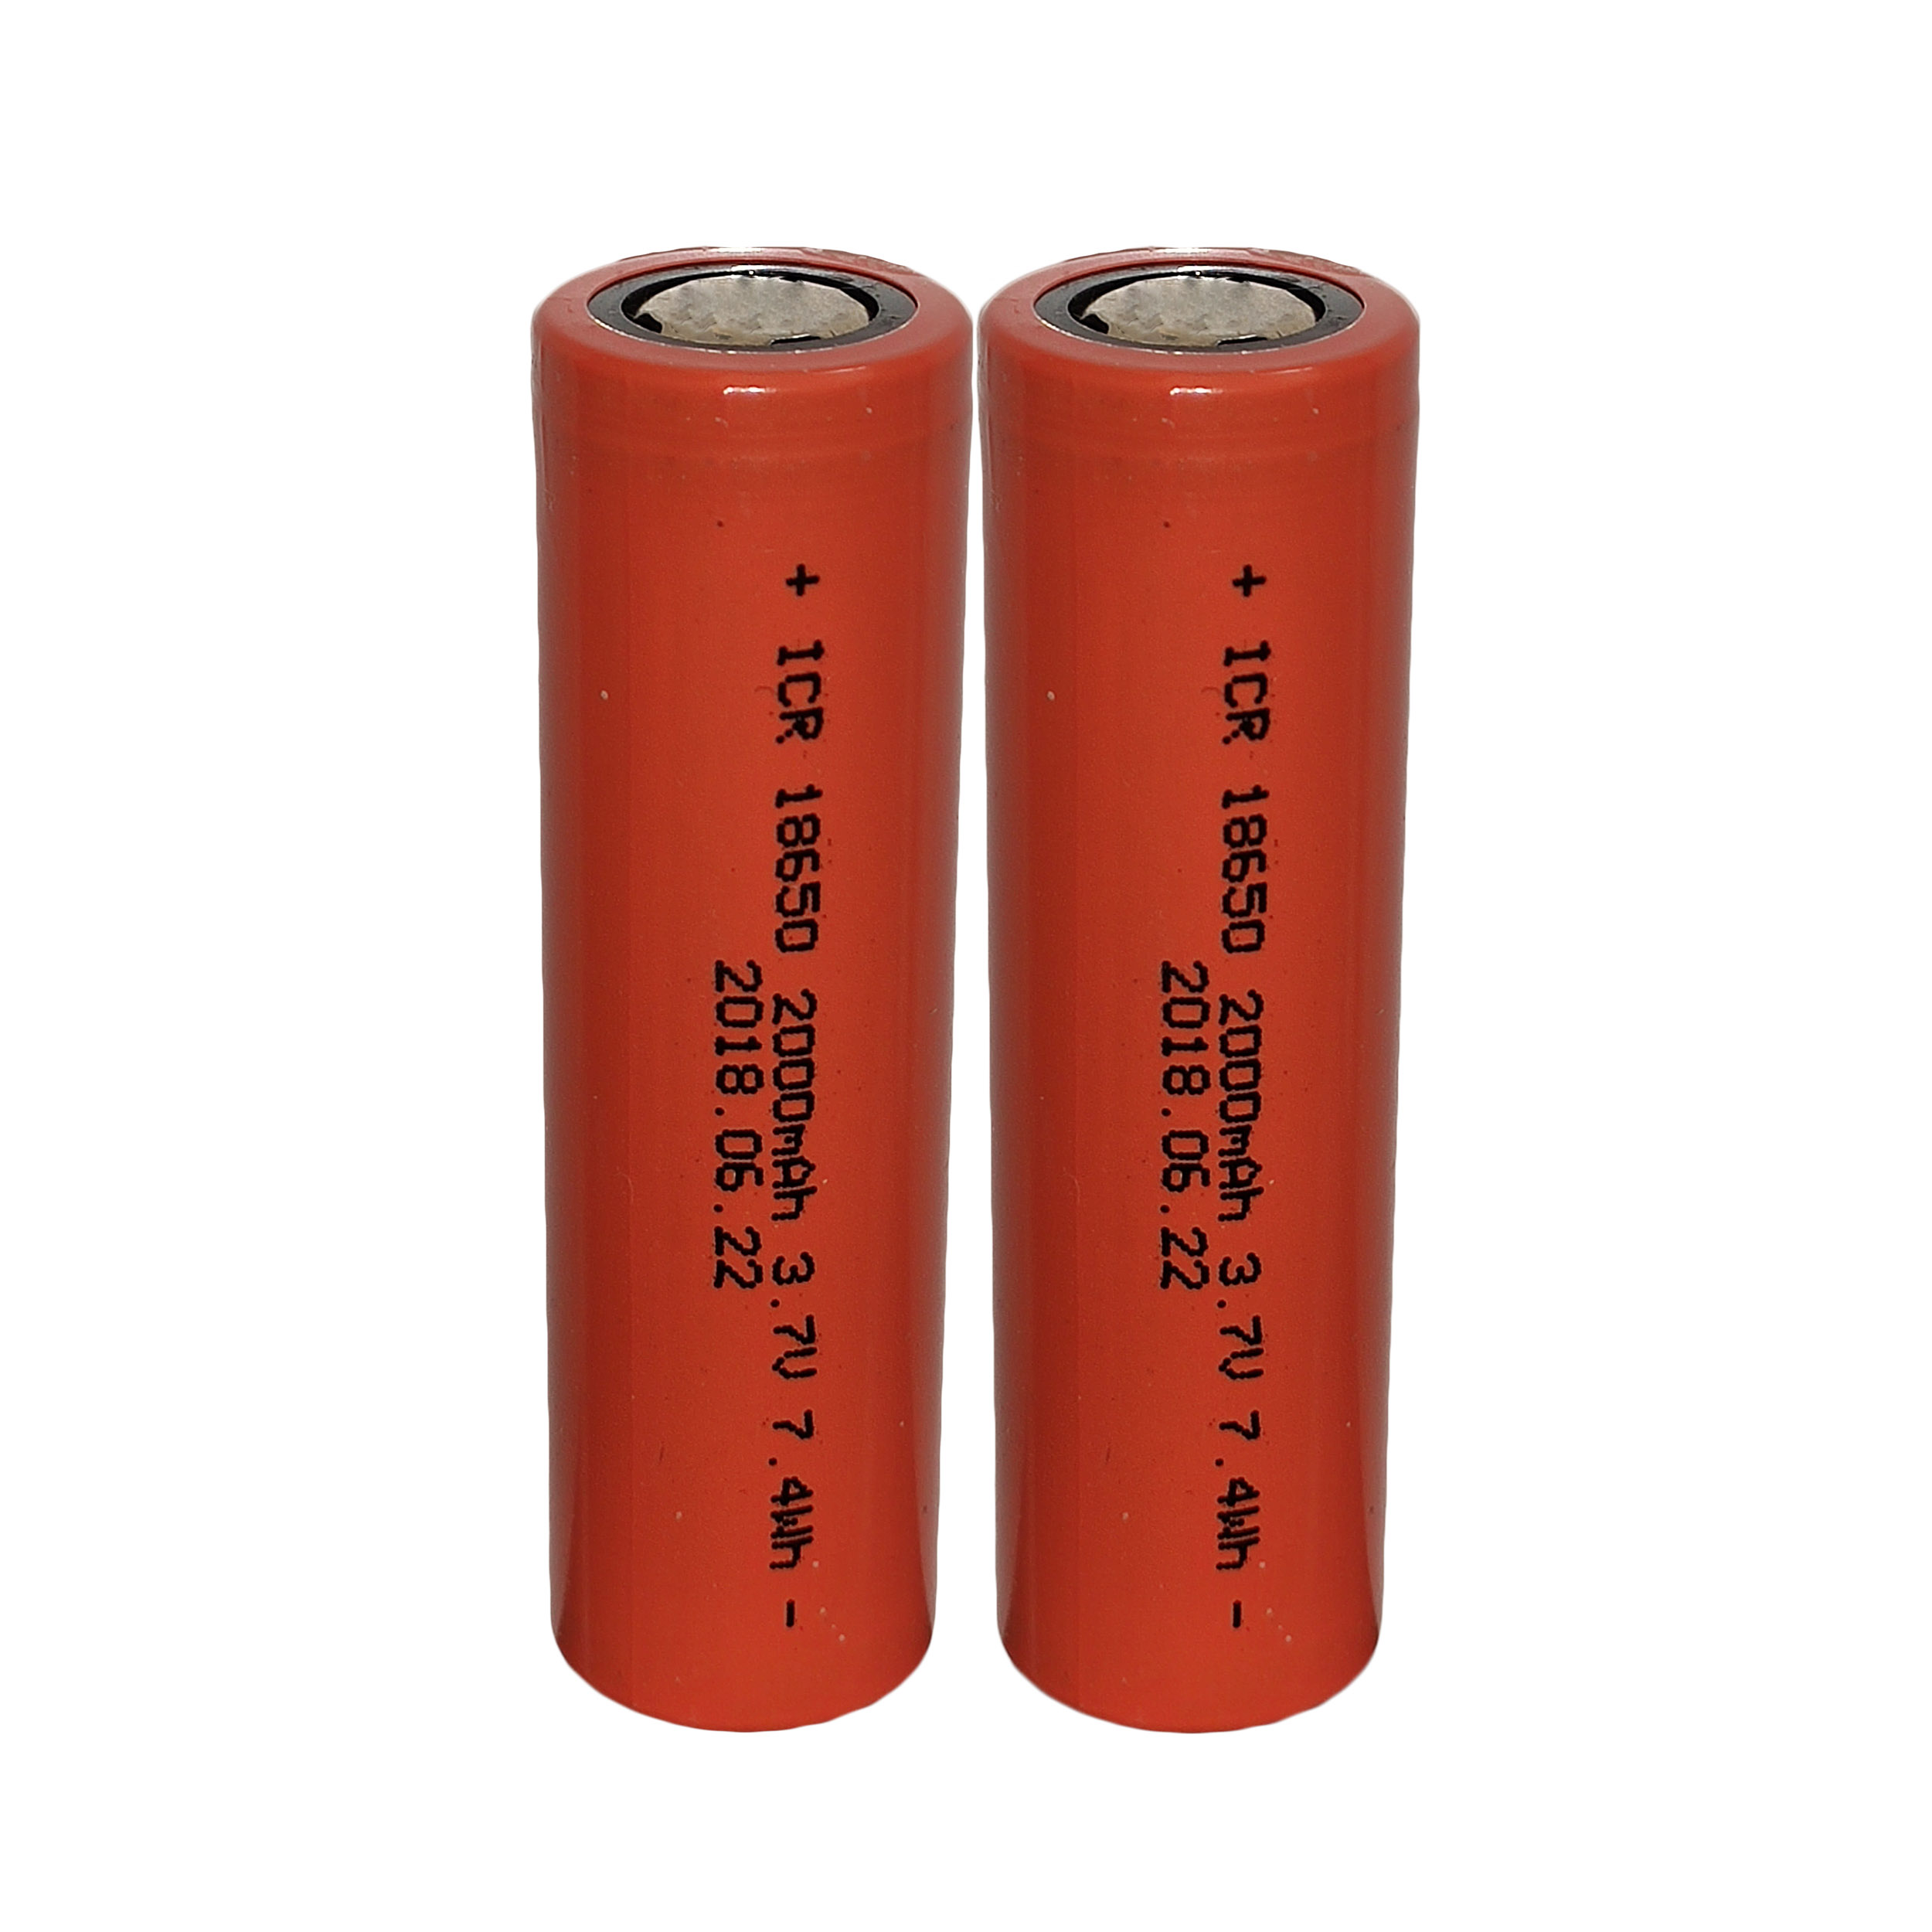  باتری لیتیوم یون قابل شارژ مدل al-2600 ظرفیت 2000 میلی آمپر ساعت بسته 2 عددی